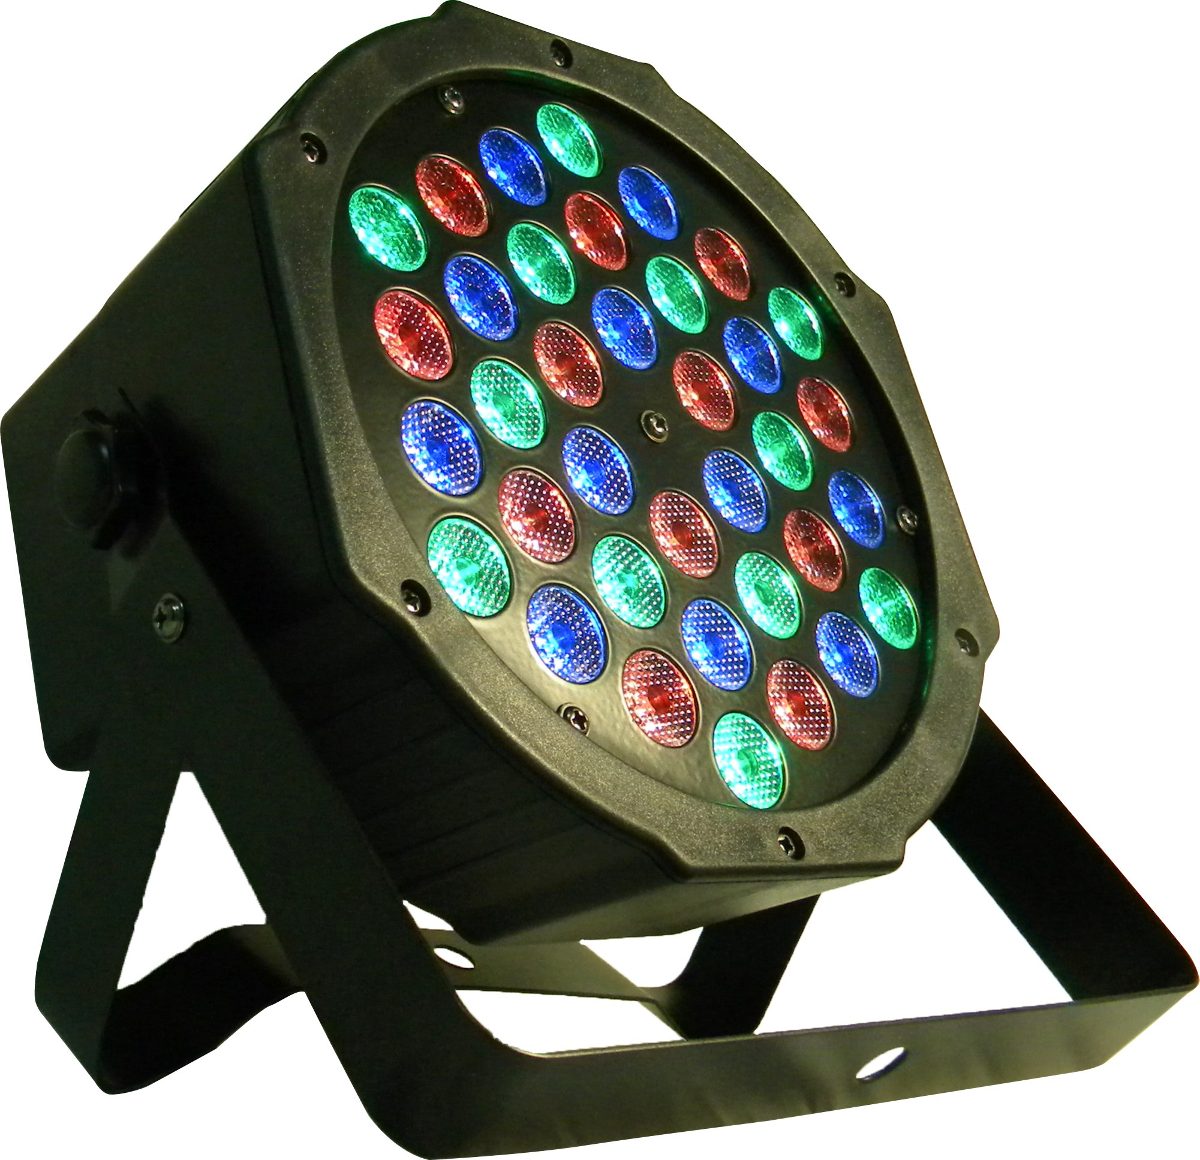 Mini Faro strobo RGB a 36 LED 36W programmabile L404 